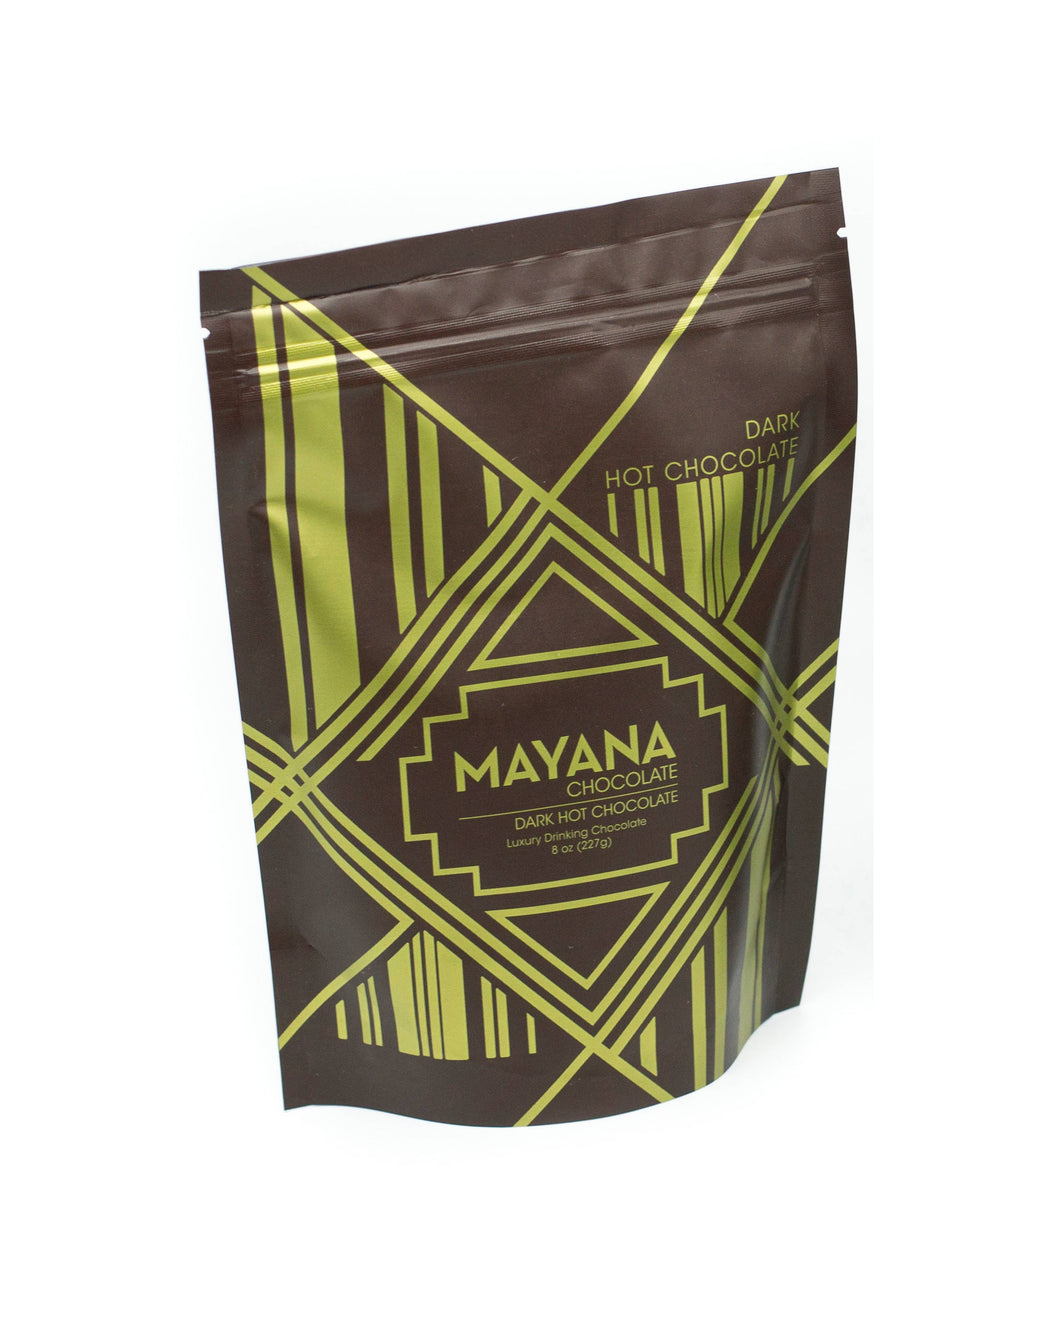 Mayana Chocolate - Dark Hot Chocolate - Limited 2021 Availability